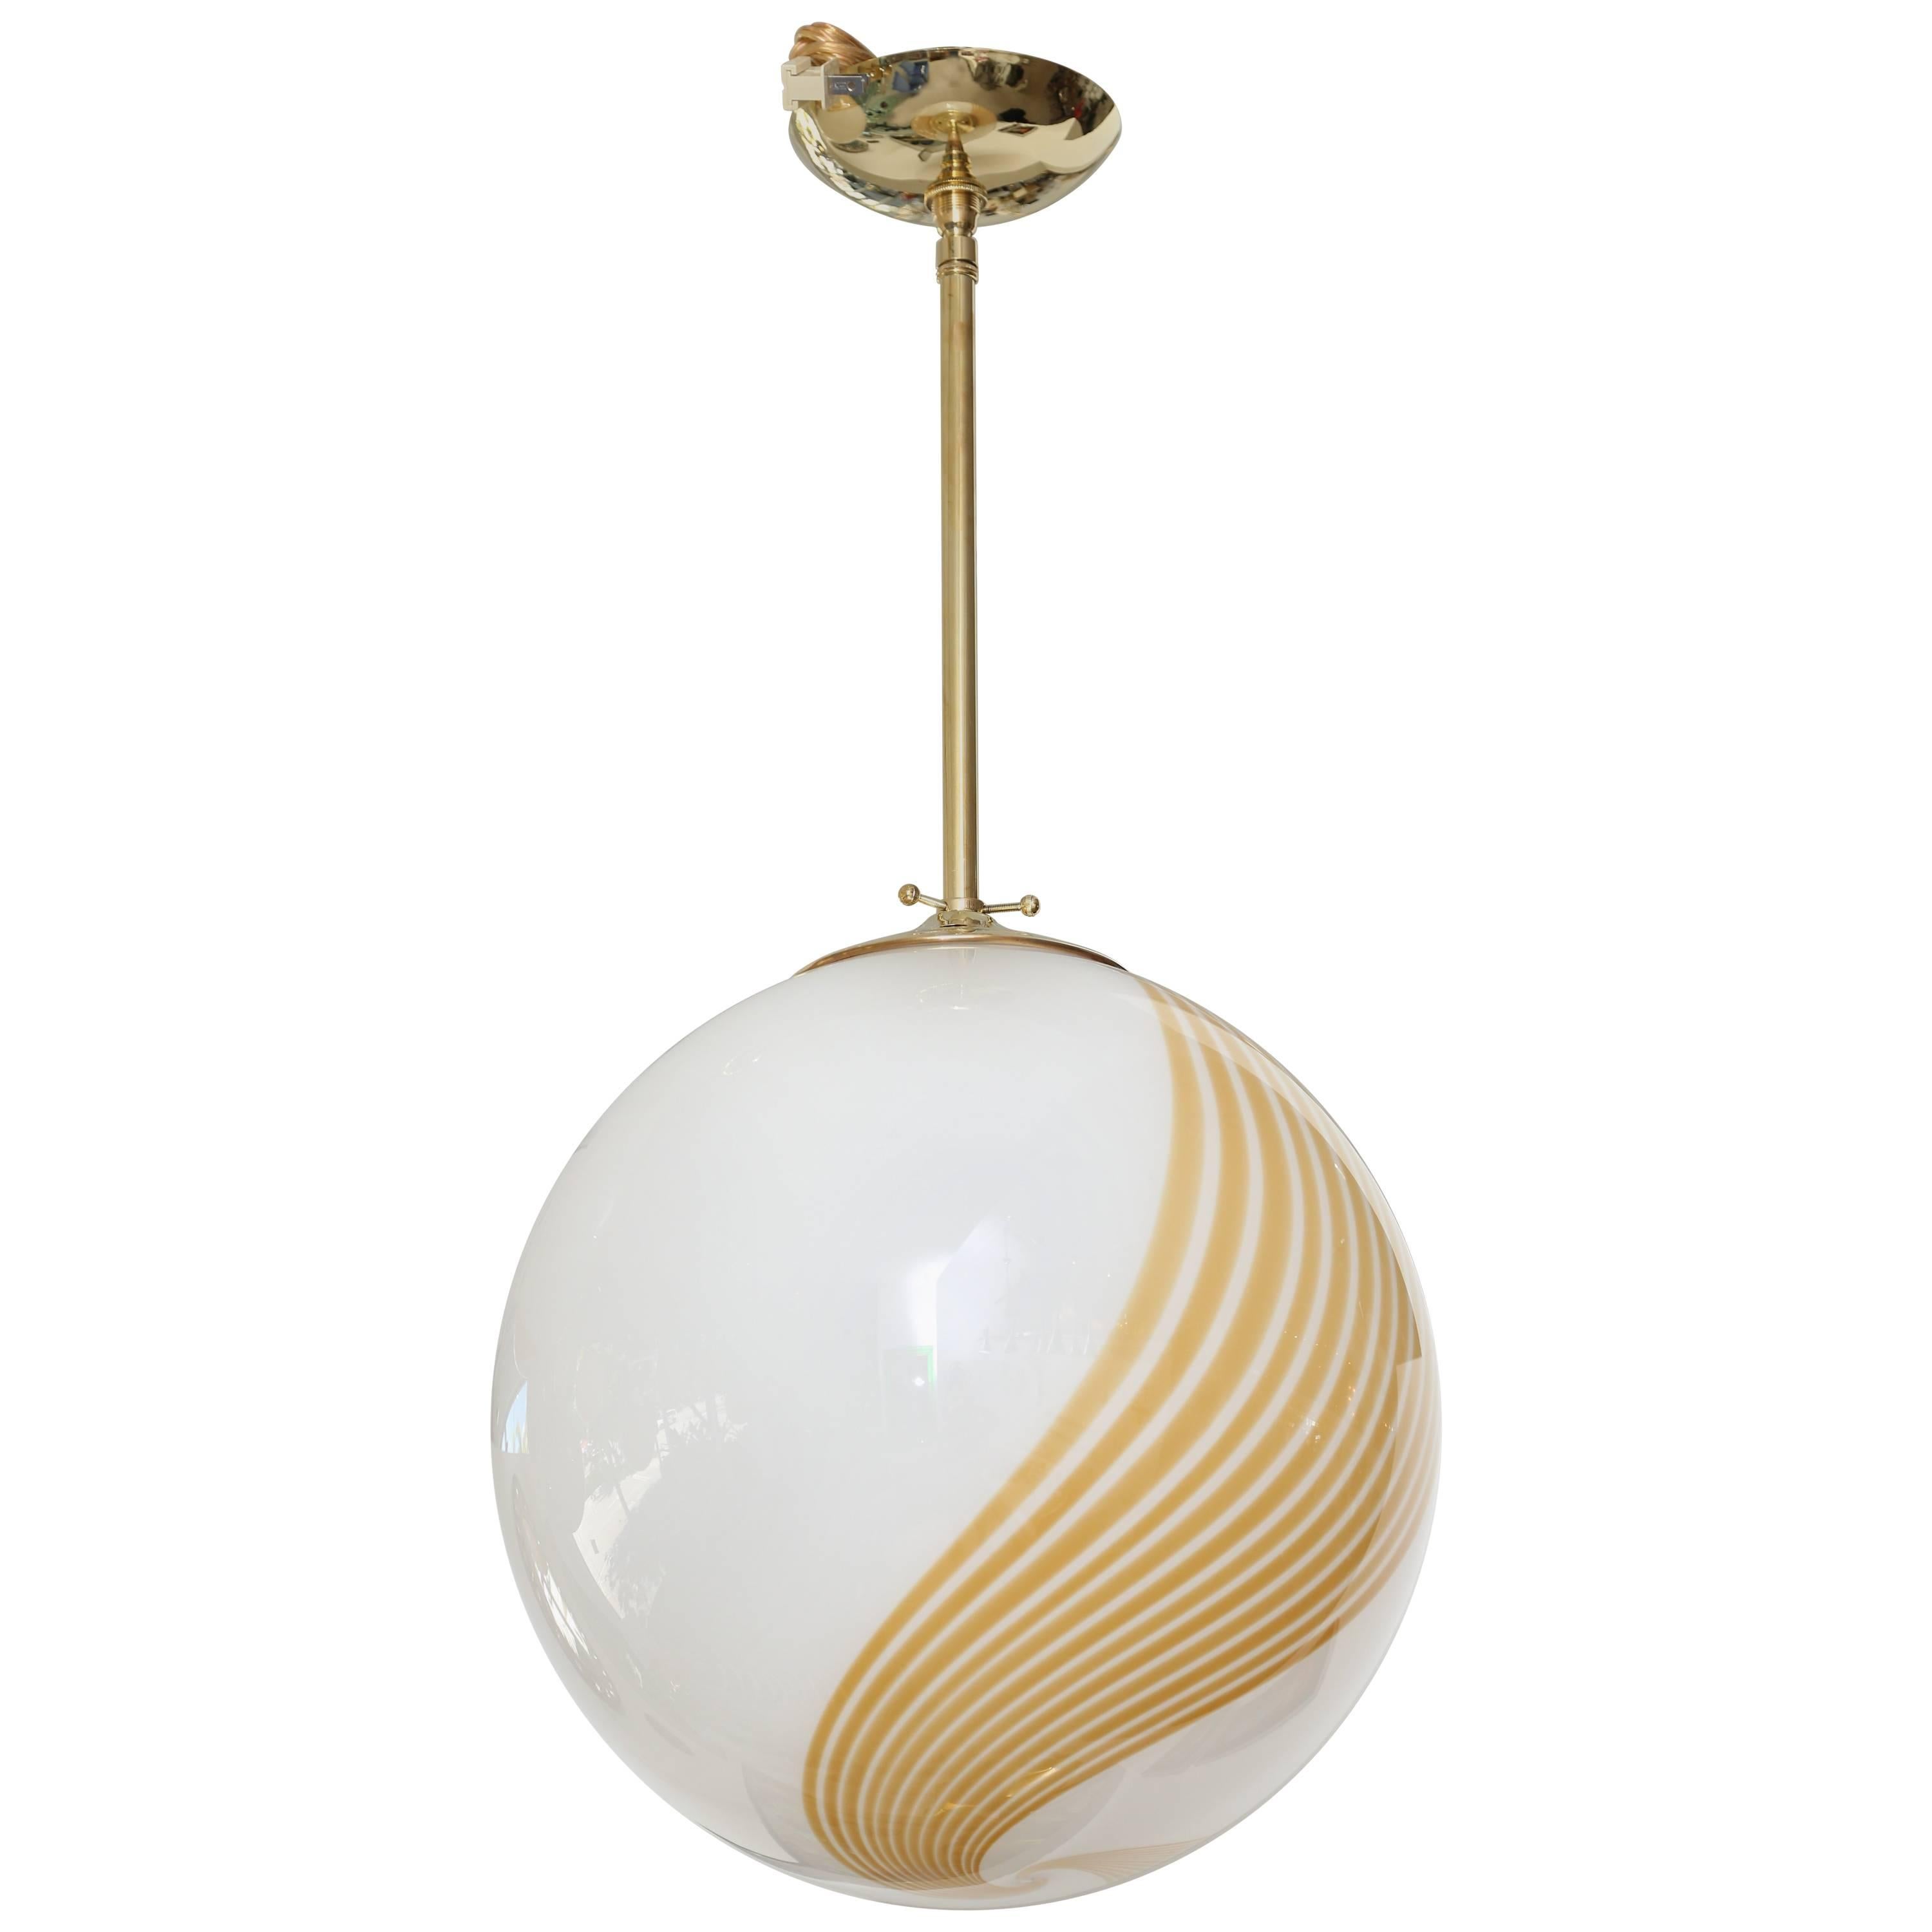 Vintage Italian Glass Ball Pendant Lamp